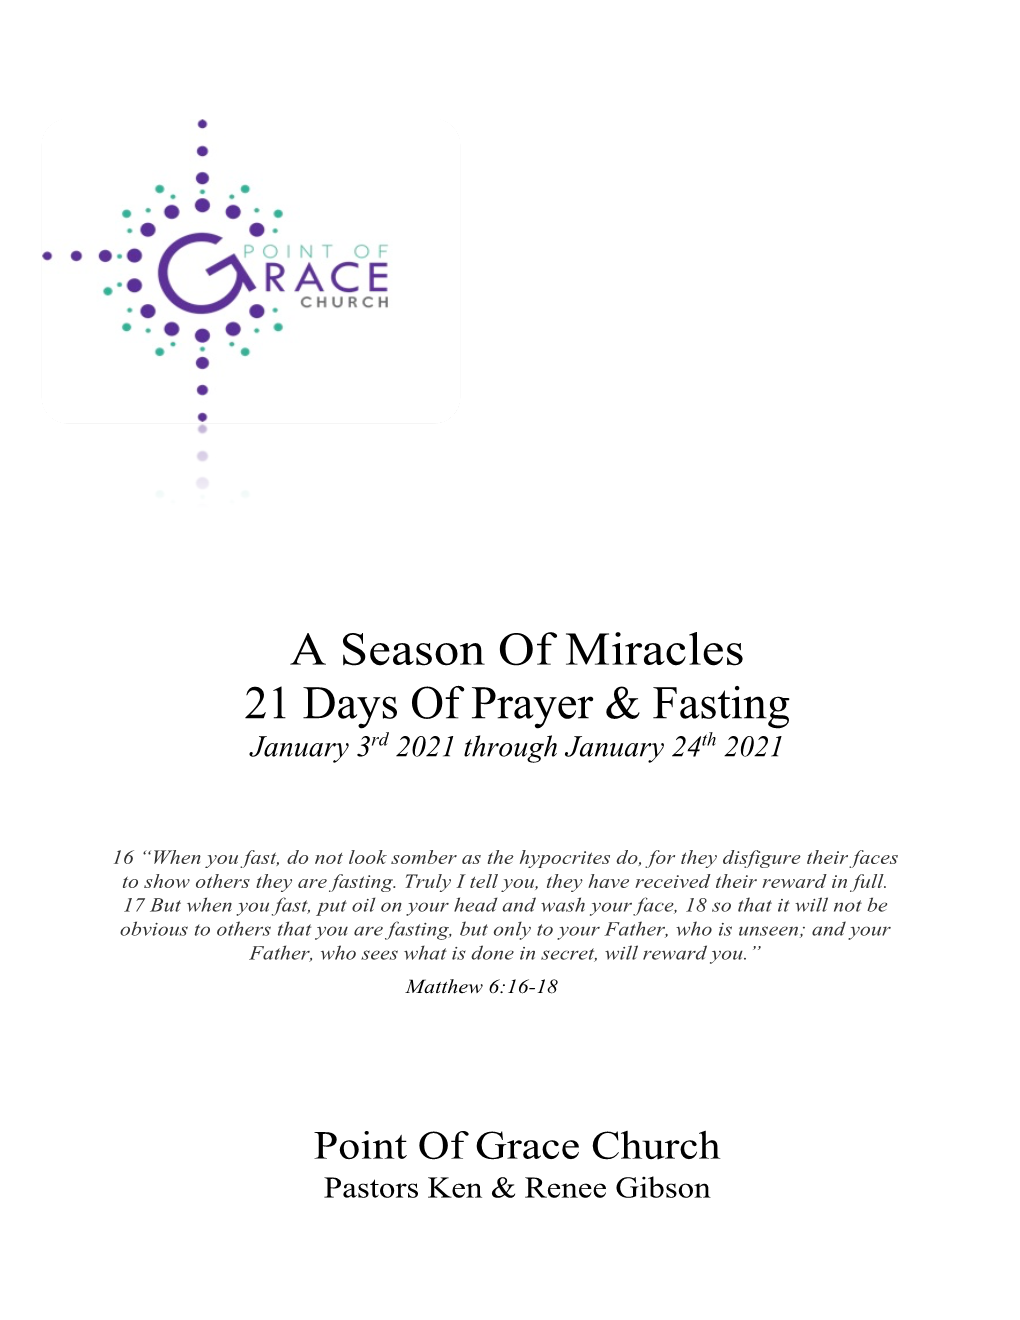 A Season of Miracles 21 Days of Prayer & Fasting